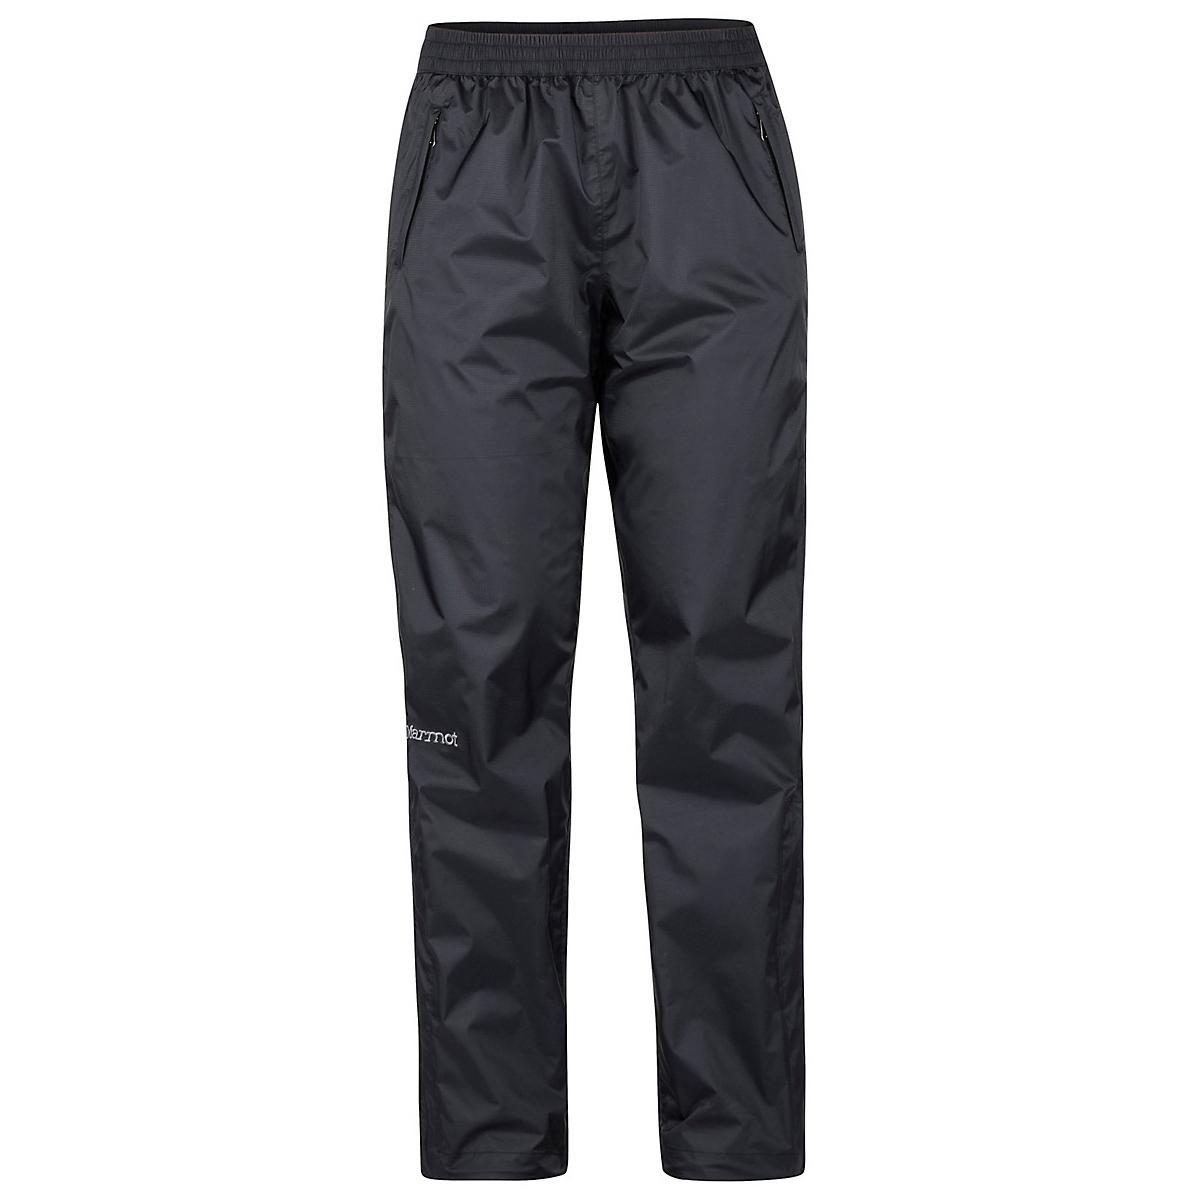 Marmot Women's Precip Eco Pants - Black, XS/32